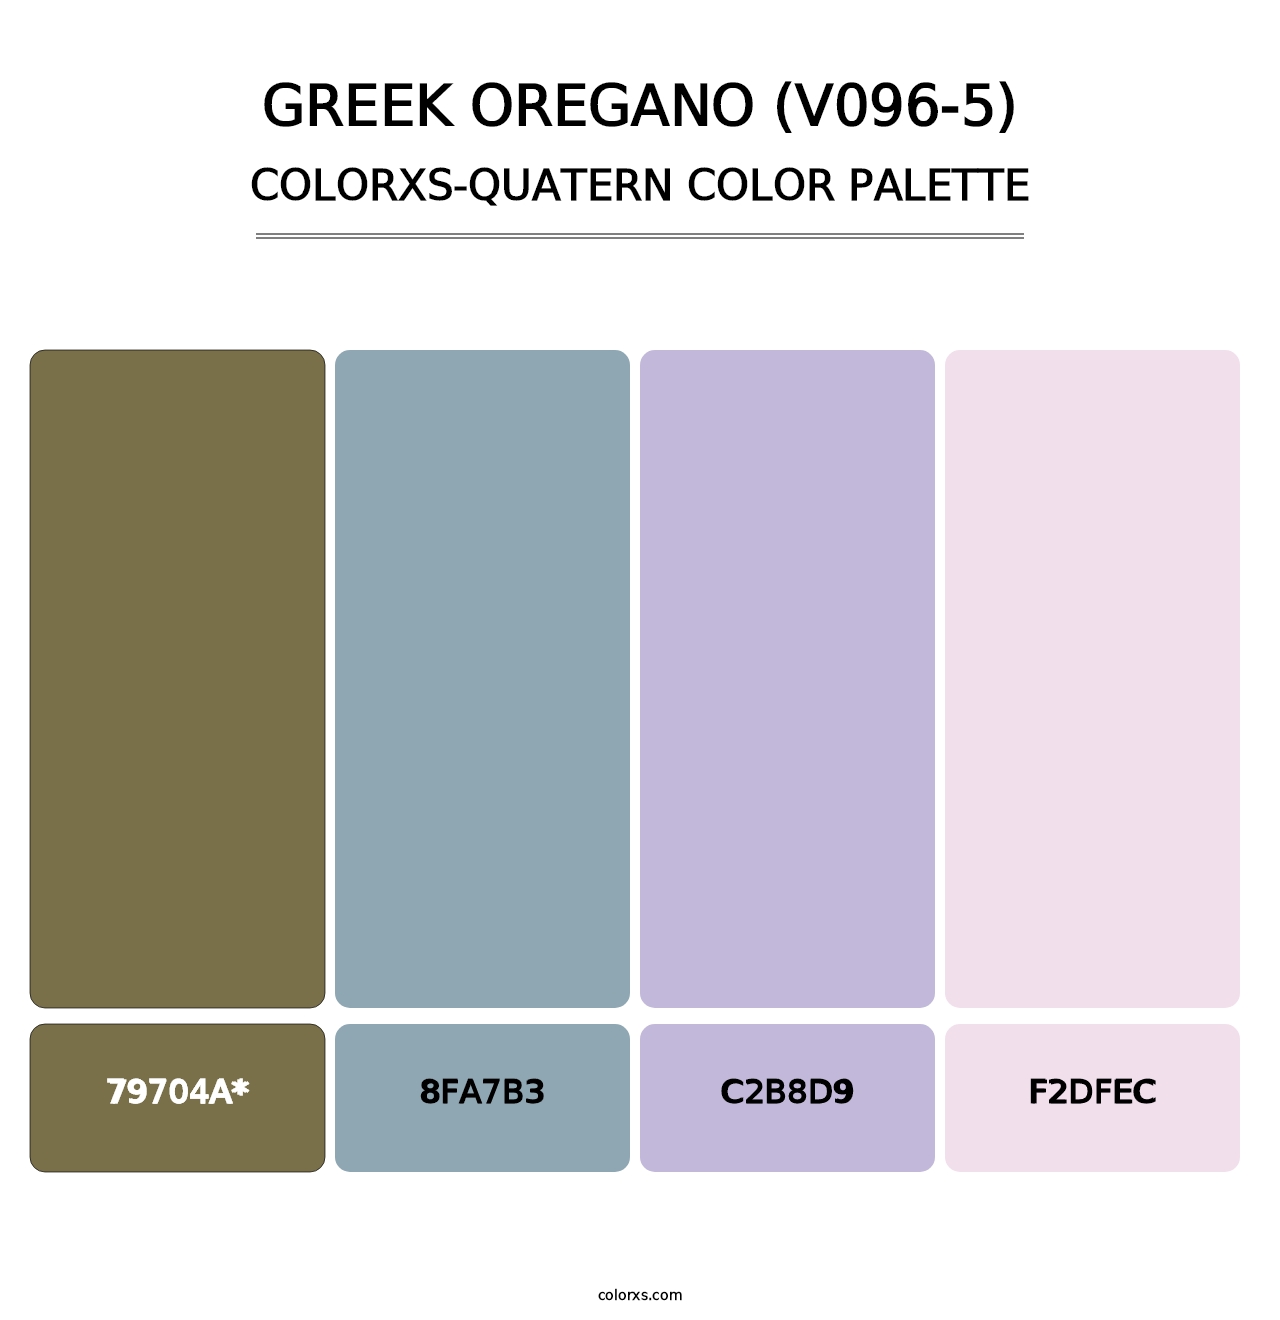 Greek Oregano (V096-5) - Colorxs Quatern Palette